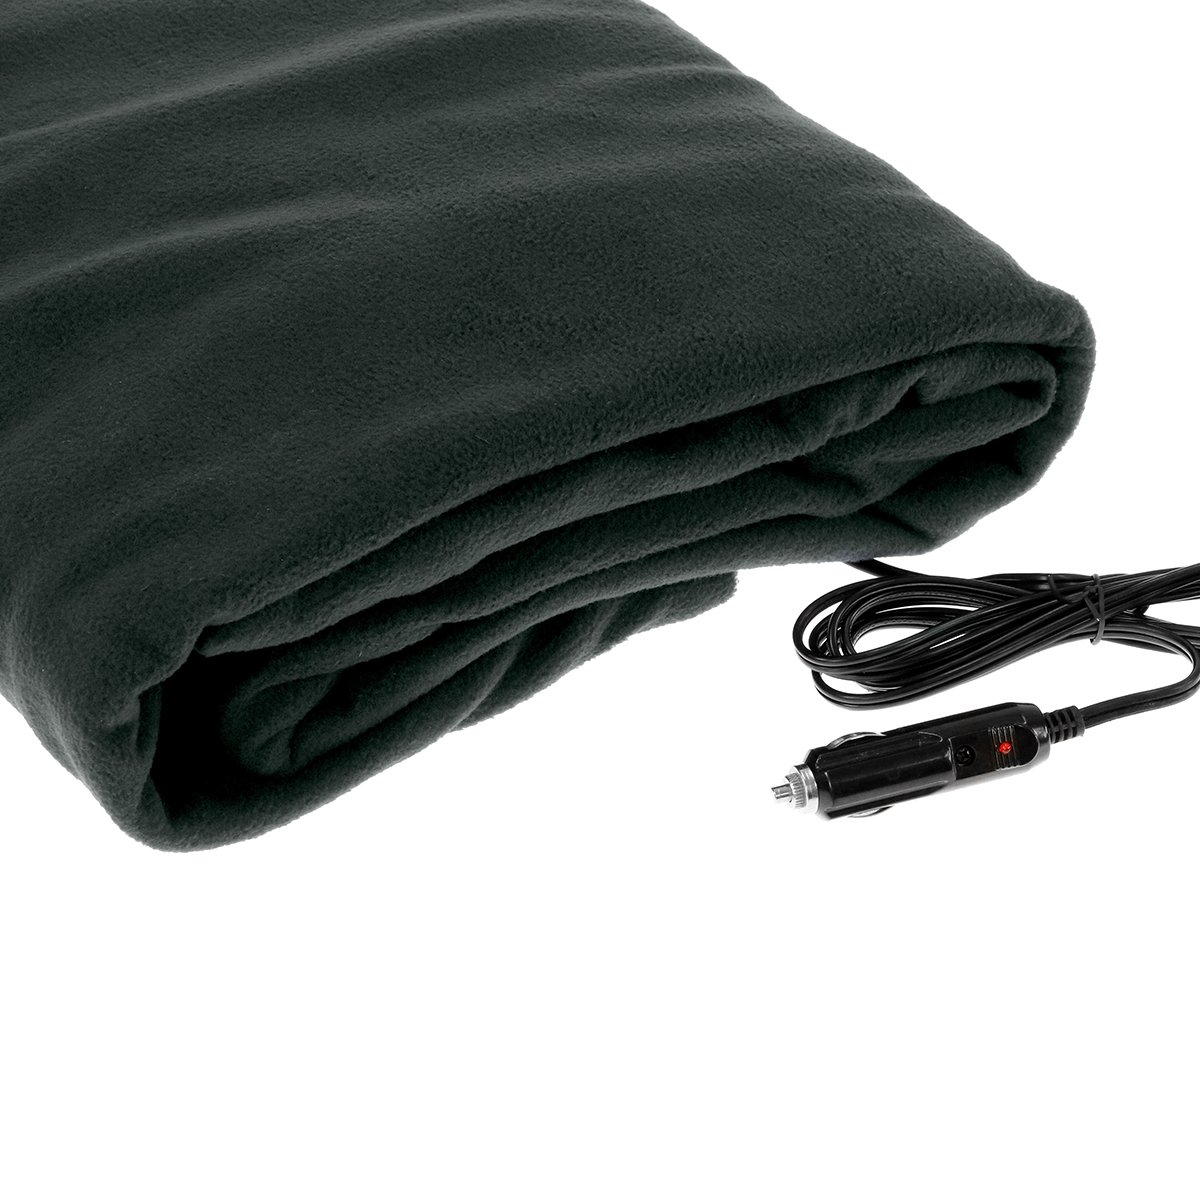 Heated Electric Car Blanket 150x110cm 12V - Black 2